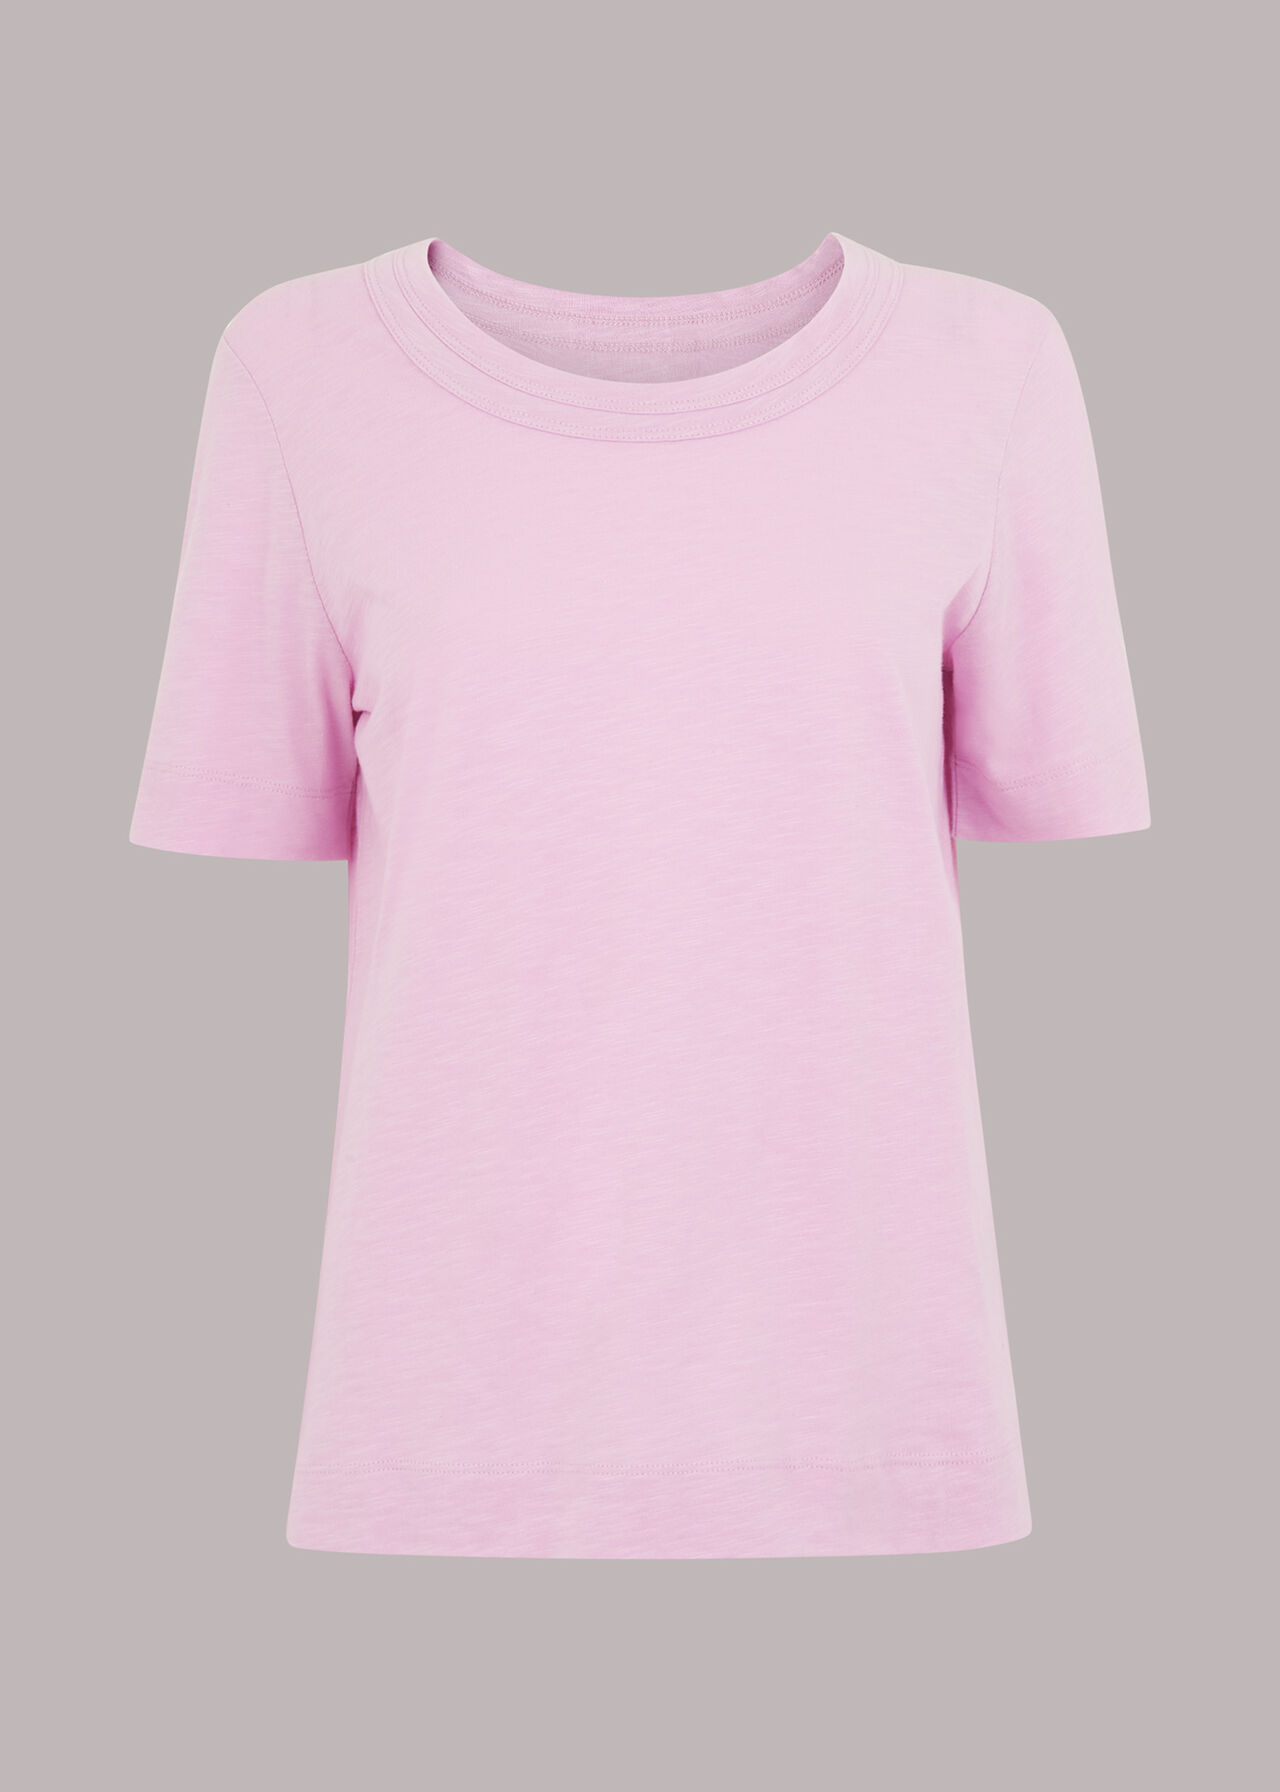 Double Rosa | WHISTLES Trim Lilac | T-Shirt